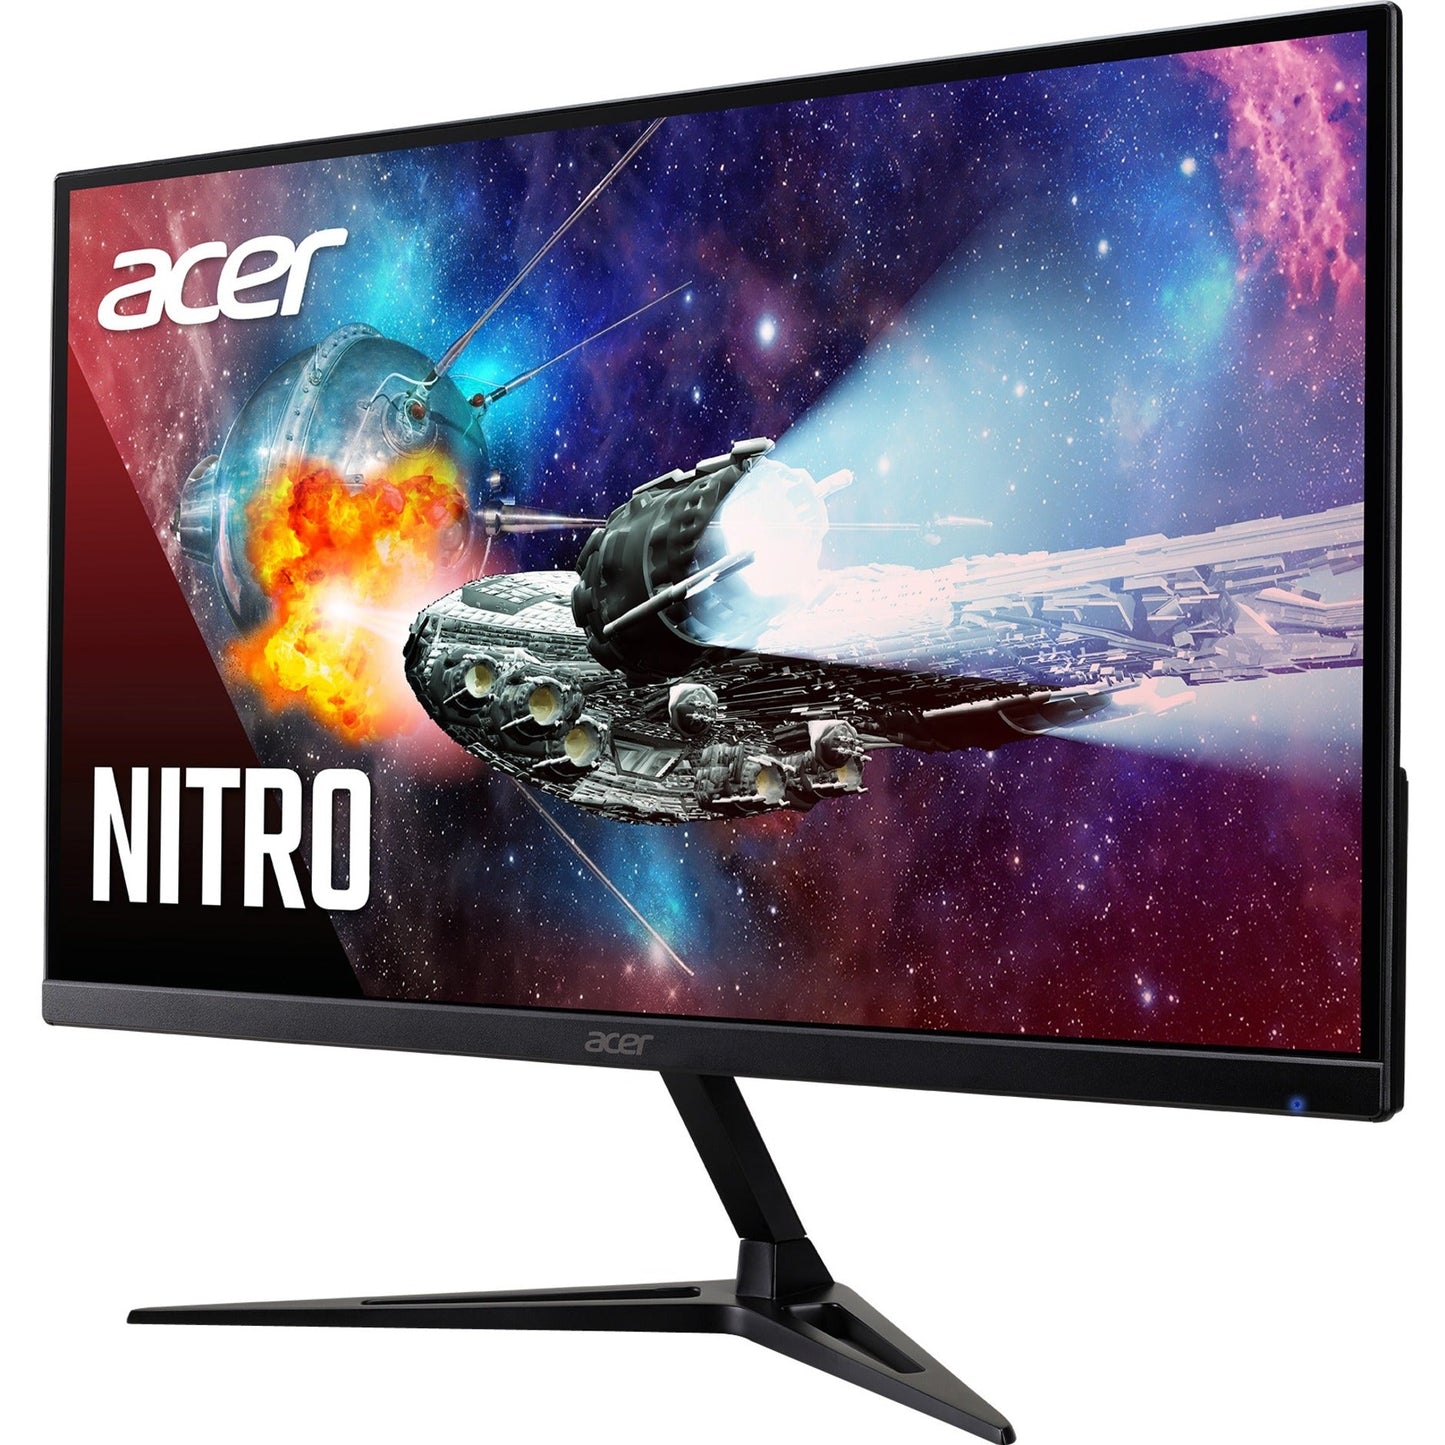 Acer Nitro RG271 P 27" Full HD Gaming LCD Monitor - 16:9 - Black